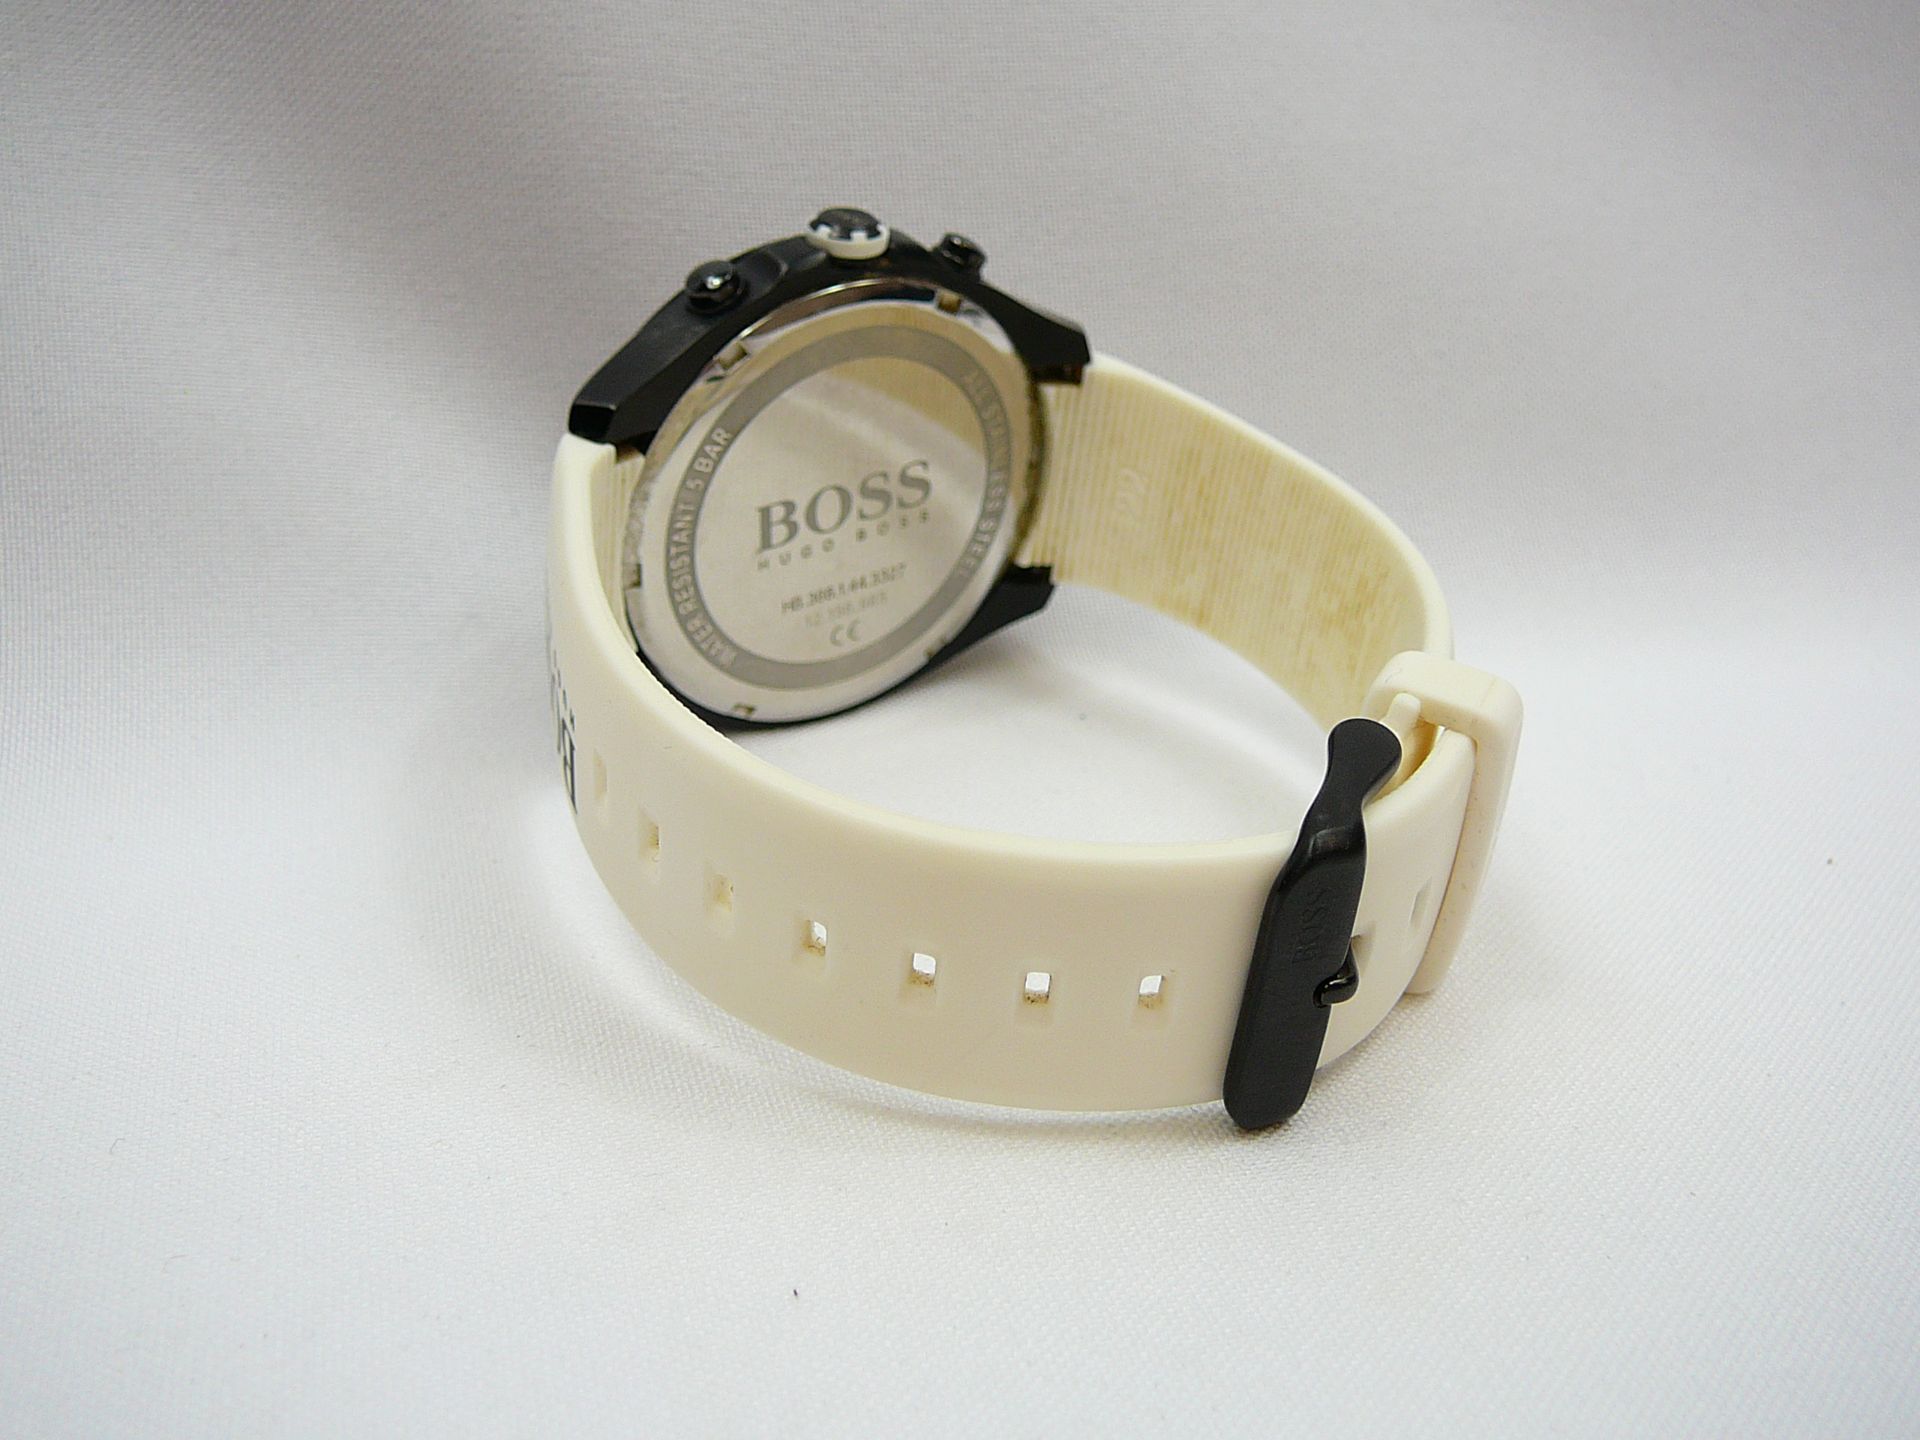 Gents Hugo Boss Wristwatch - Image 3 of 3